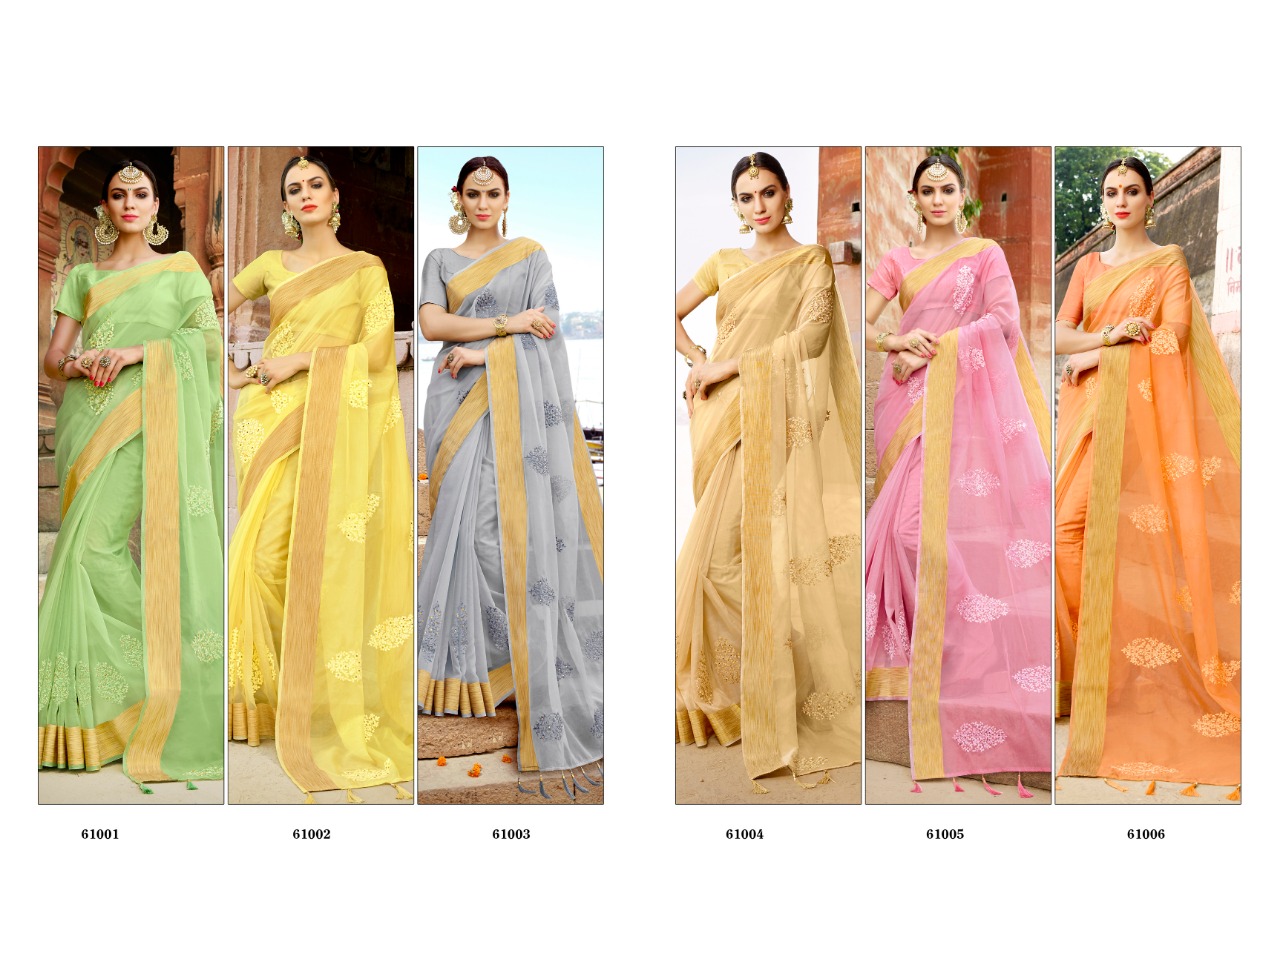 Saroj presents najiya exclusive party wear collection of sarees